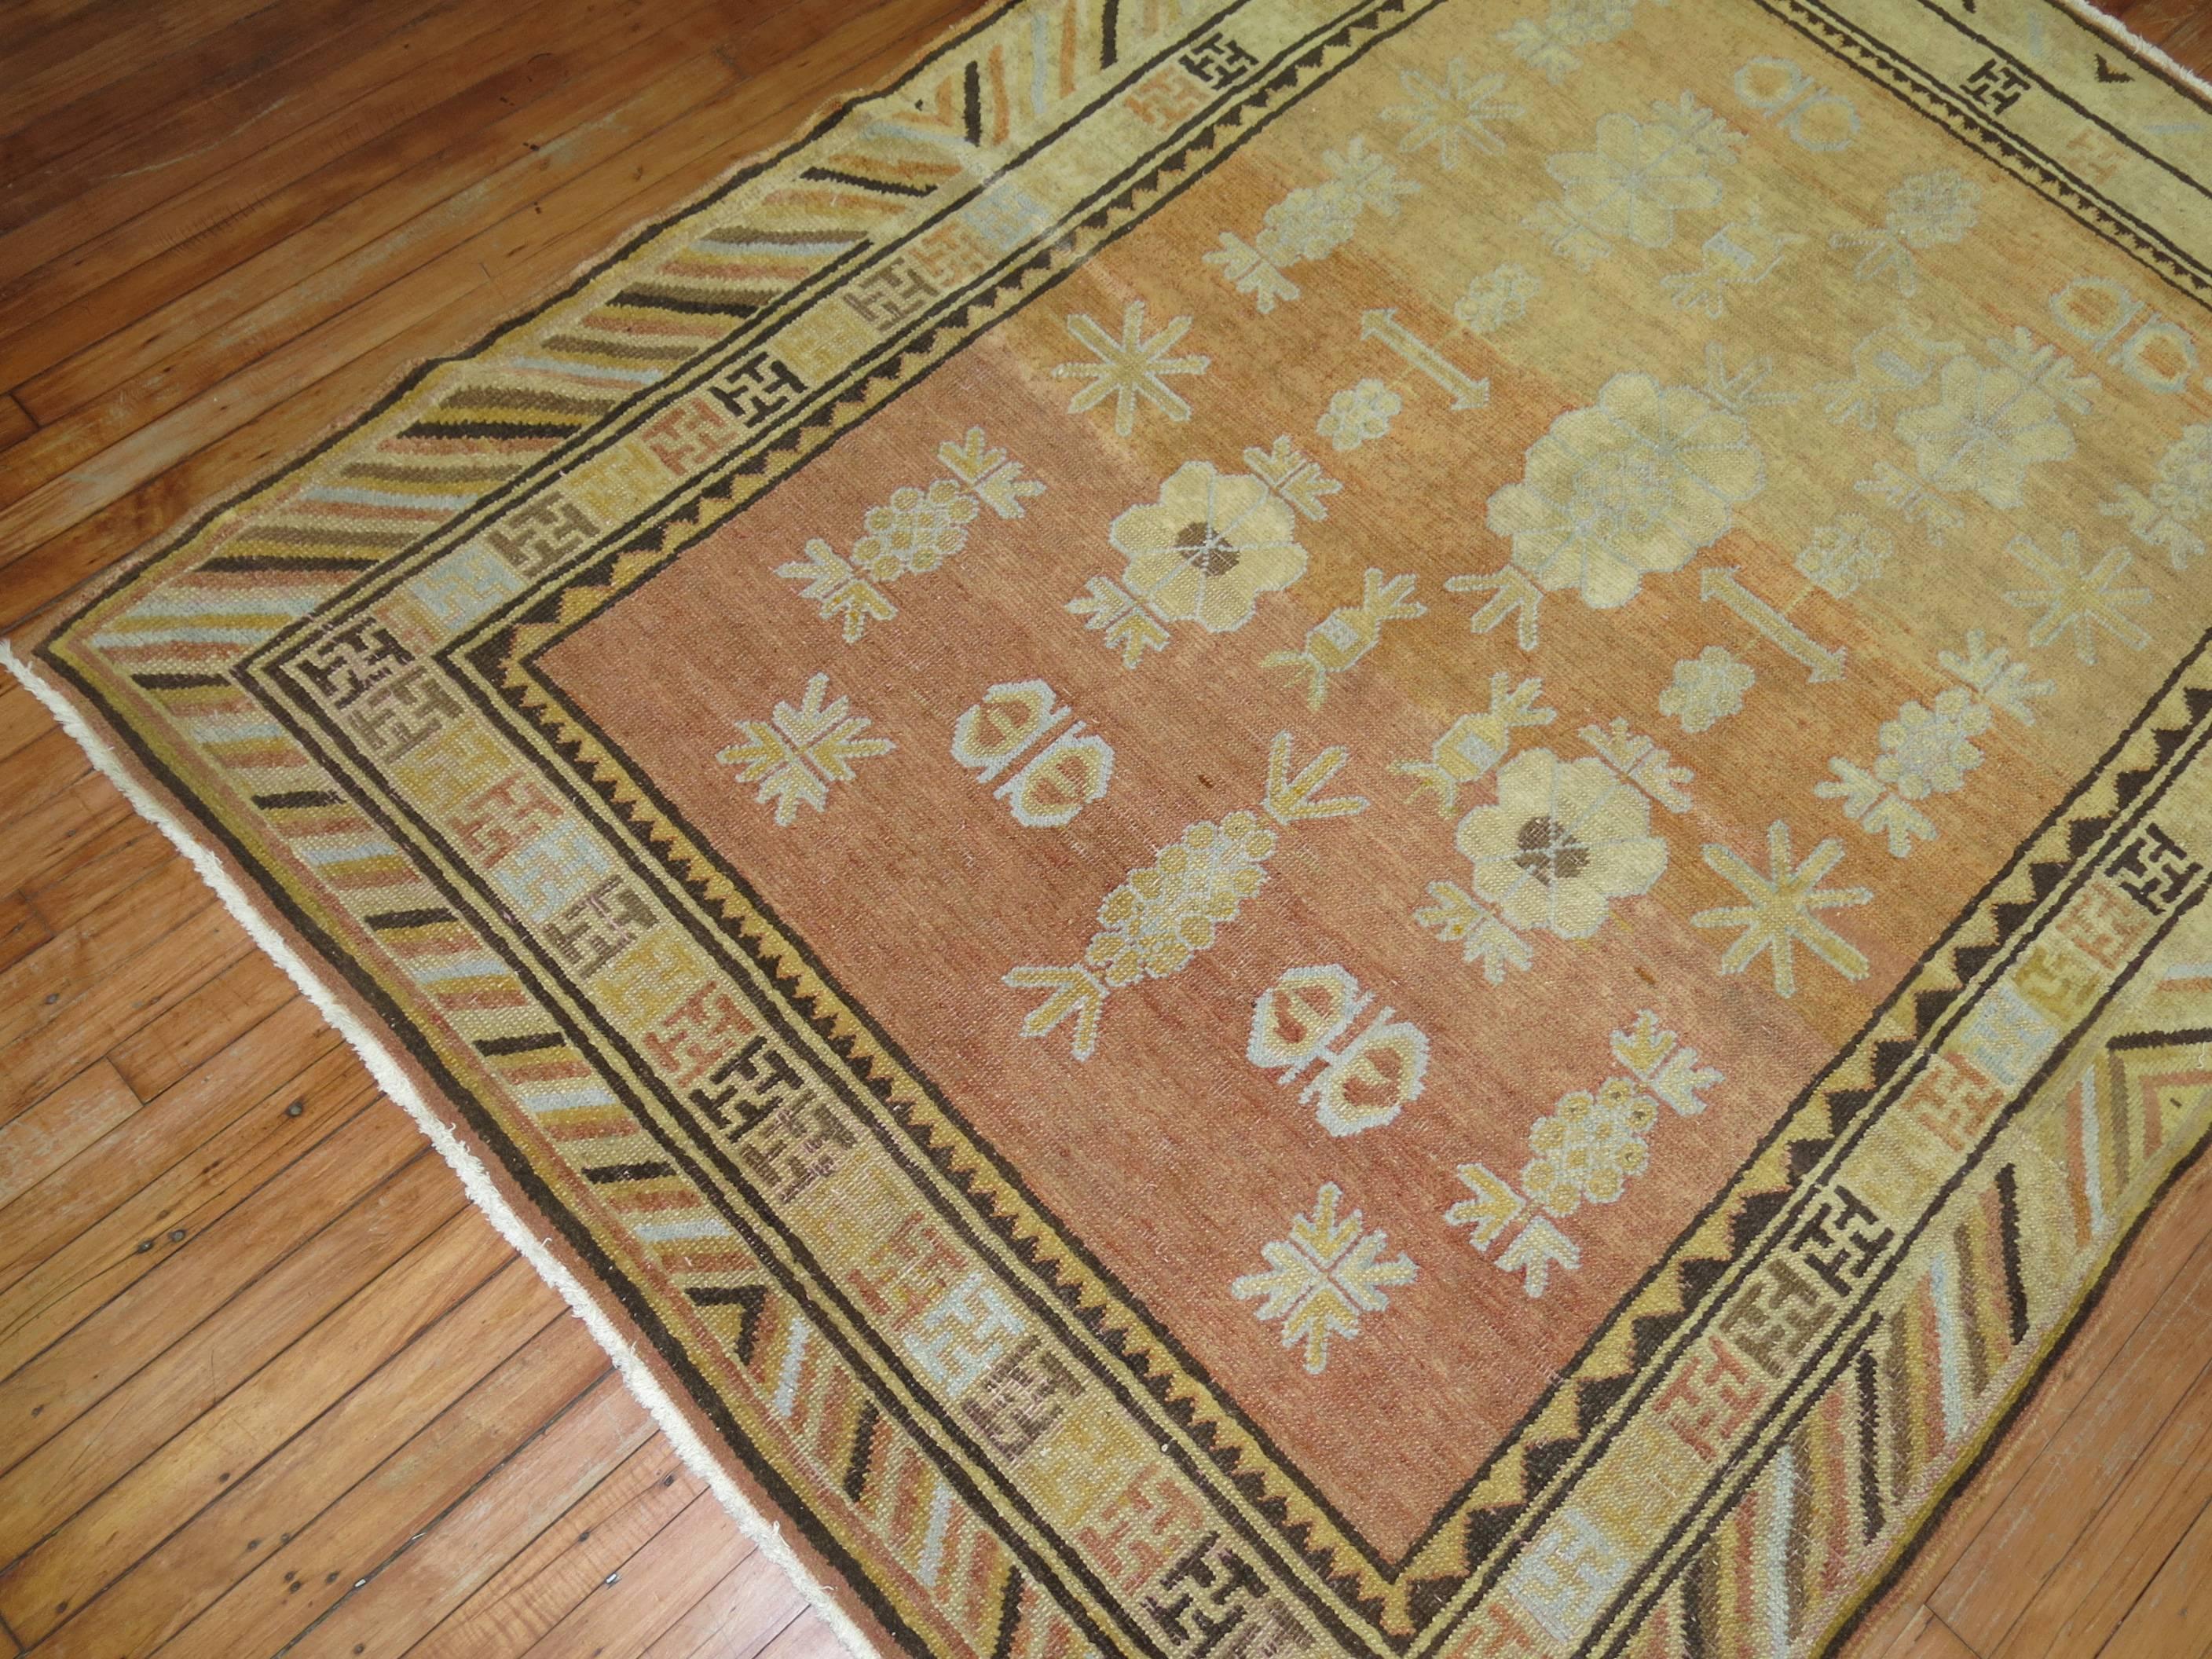 Enchanting antique Khotan rug predominantly apricot and orange.